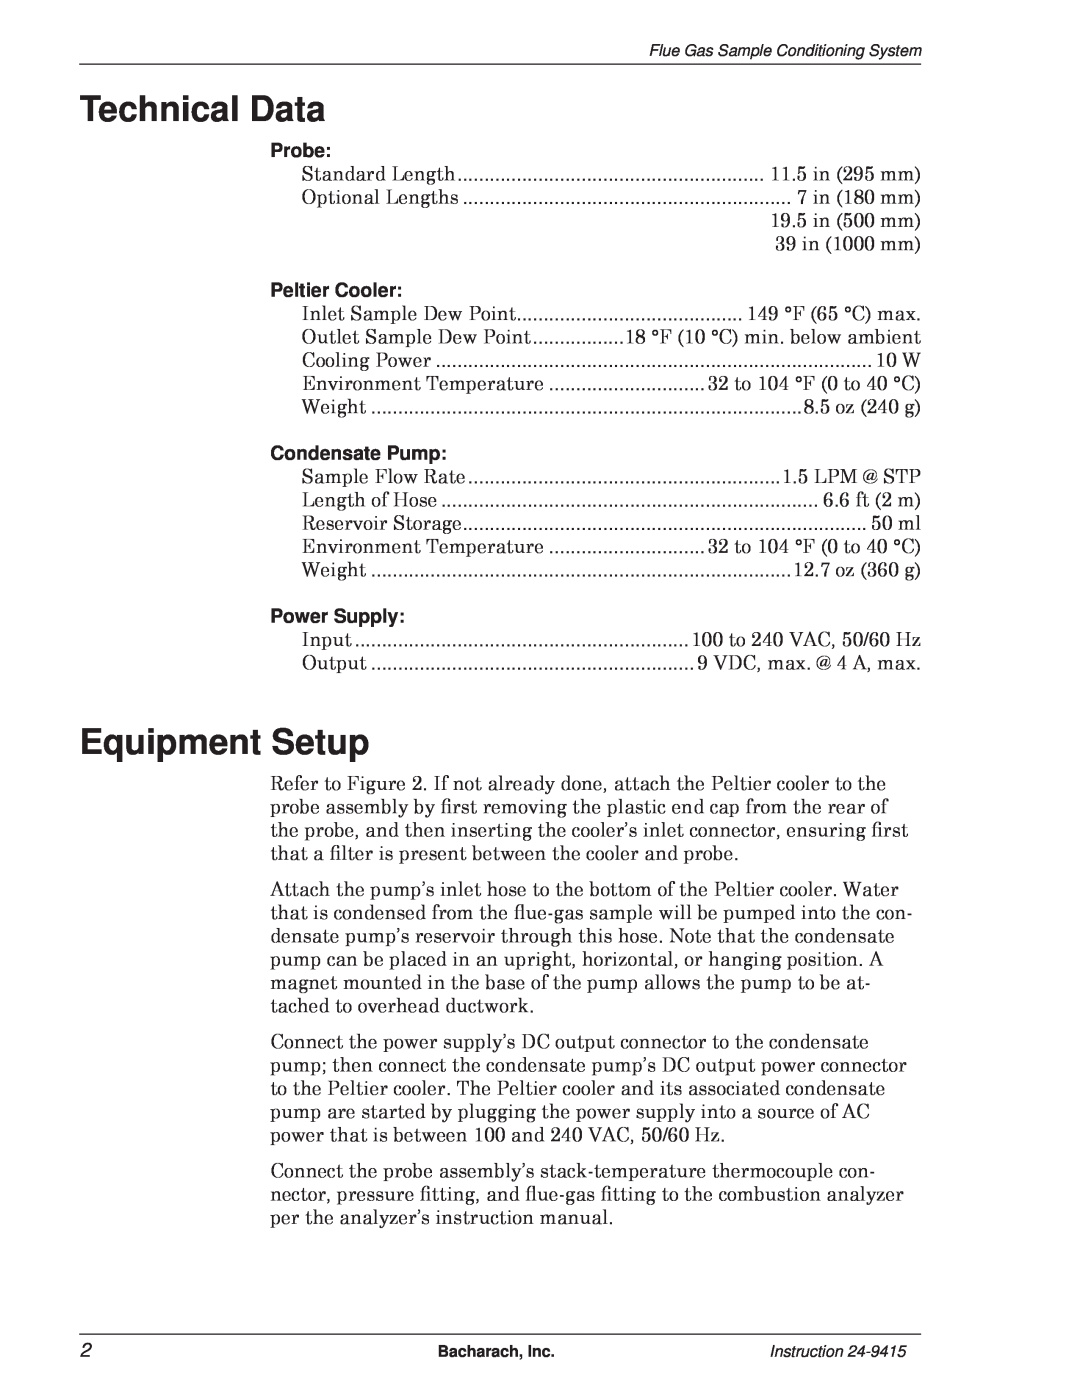 Bacharach 24-9415, 24-7224 manual Technical Data, Equipment Setup 